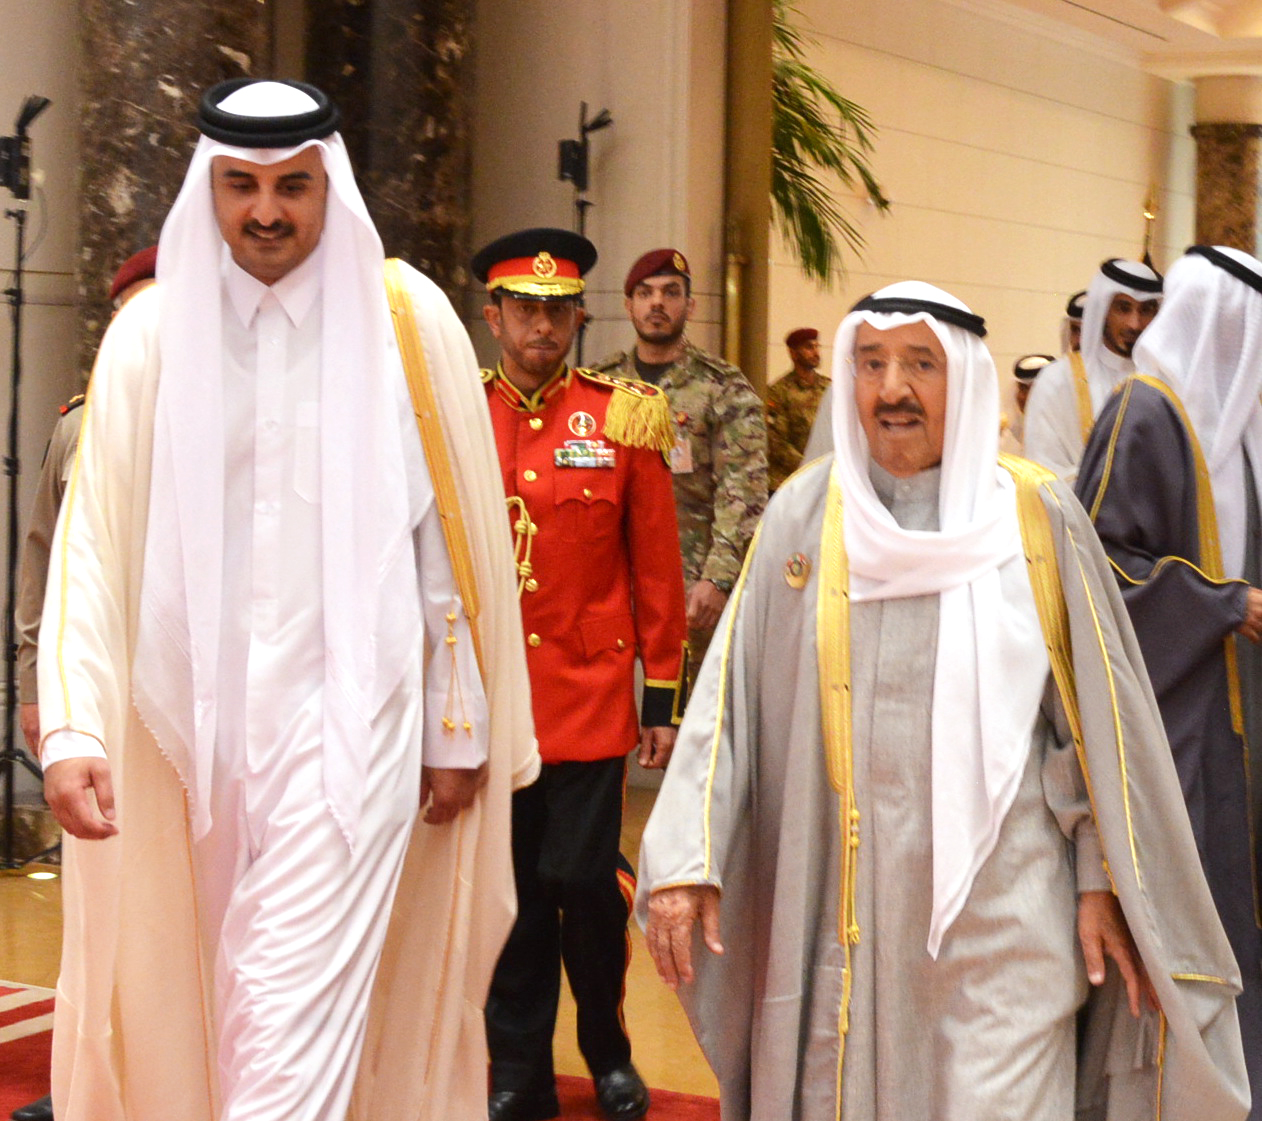 His Highness the Amir Sheikh Sabah Al-Ahmad Al-Jaber Al-Sabah received Qatar's Amir Sheikh Tamim bin Hamad Al-Thani